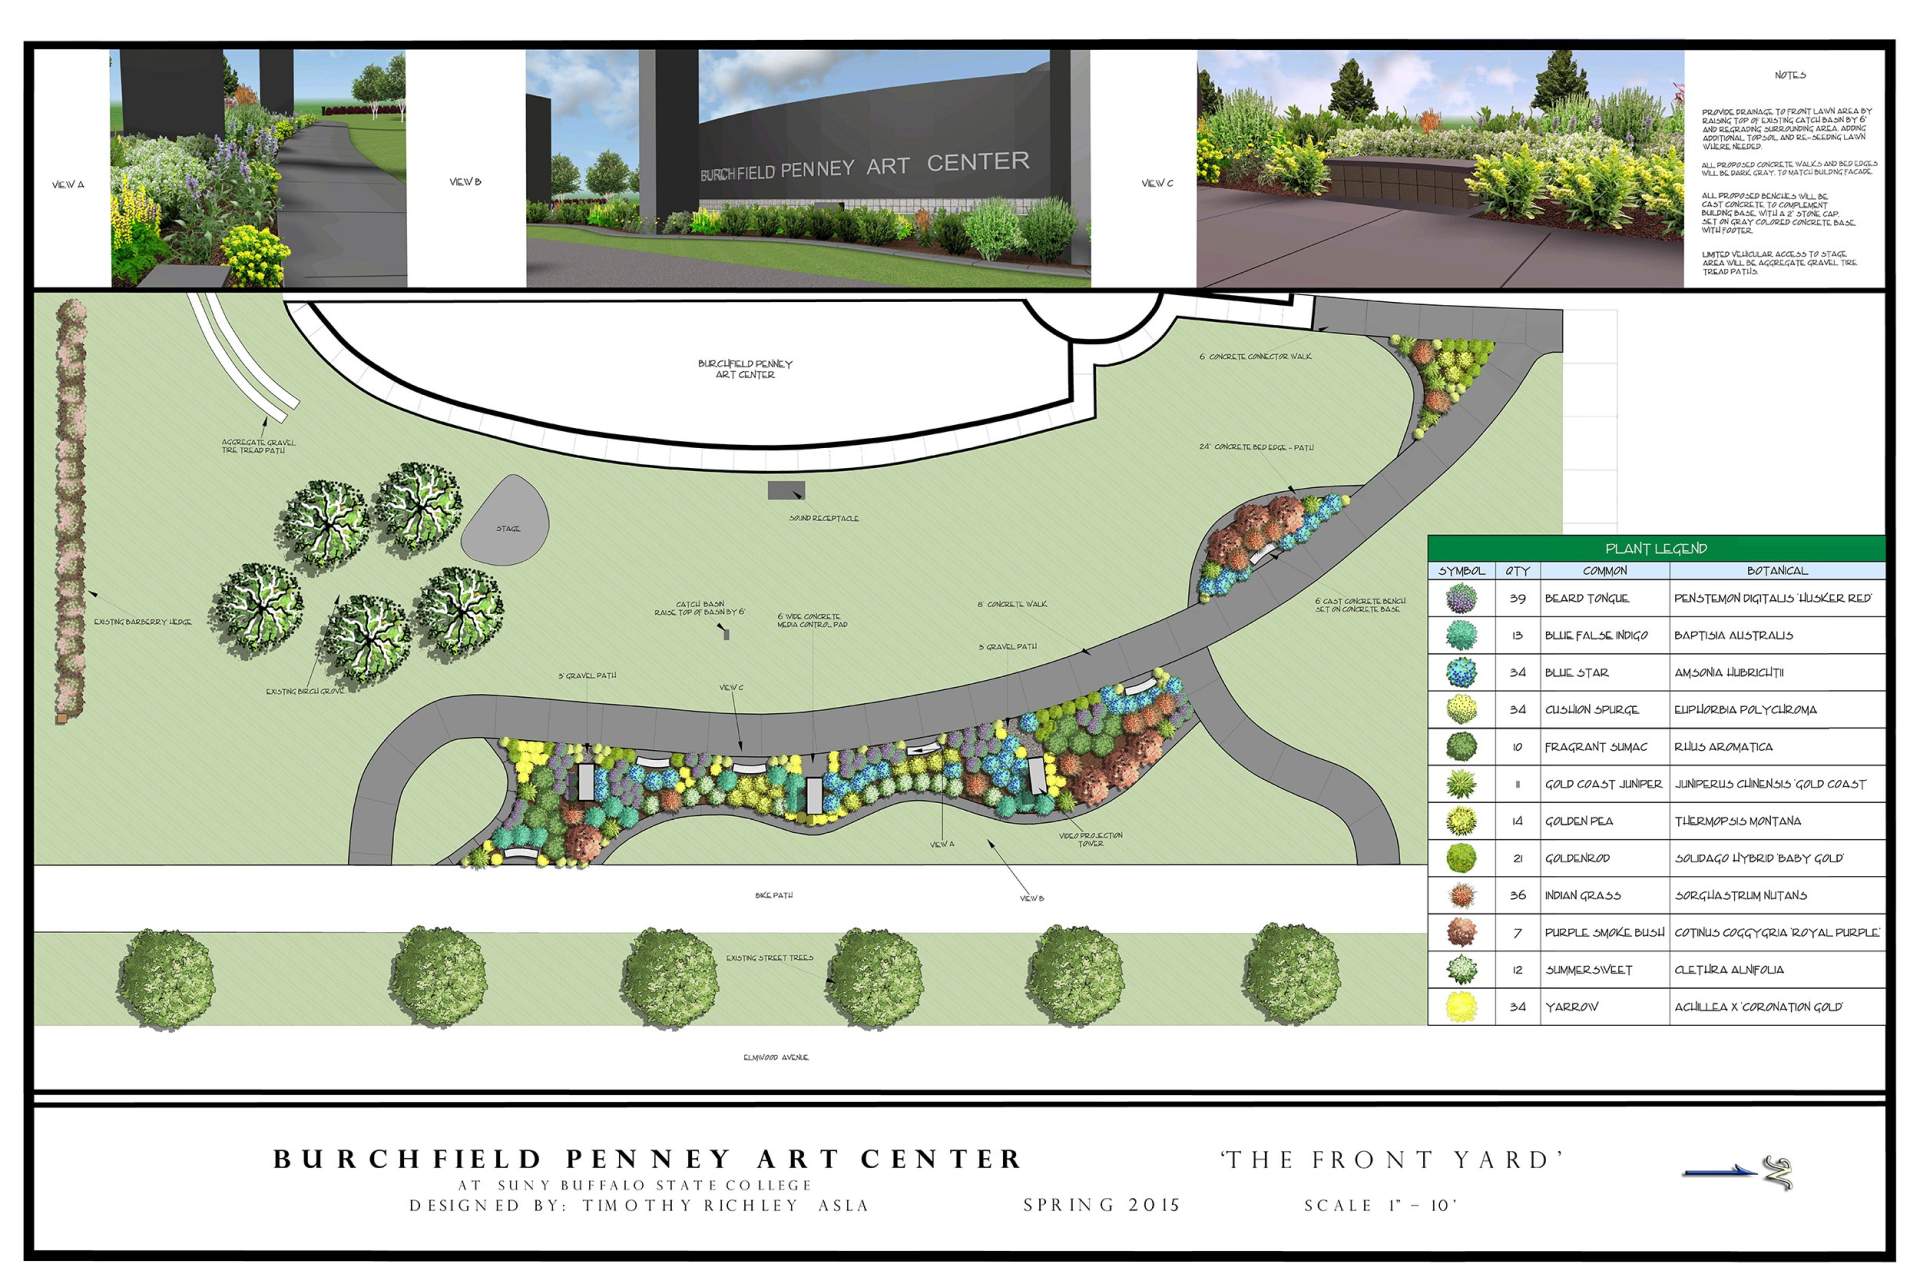 Landscape Design Enhances Front Yard at the Burchfield Penney